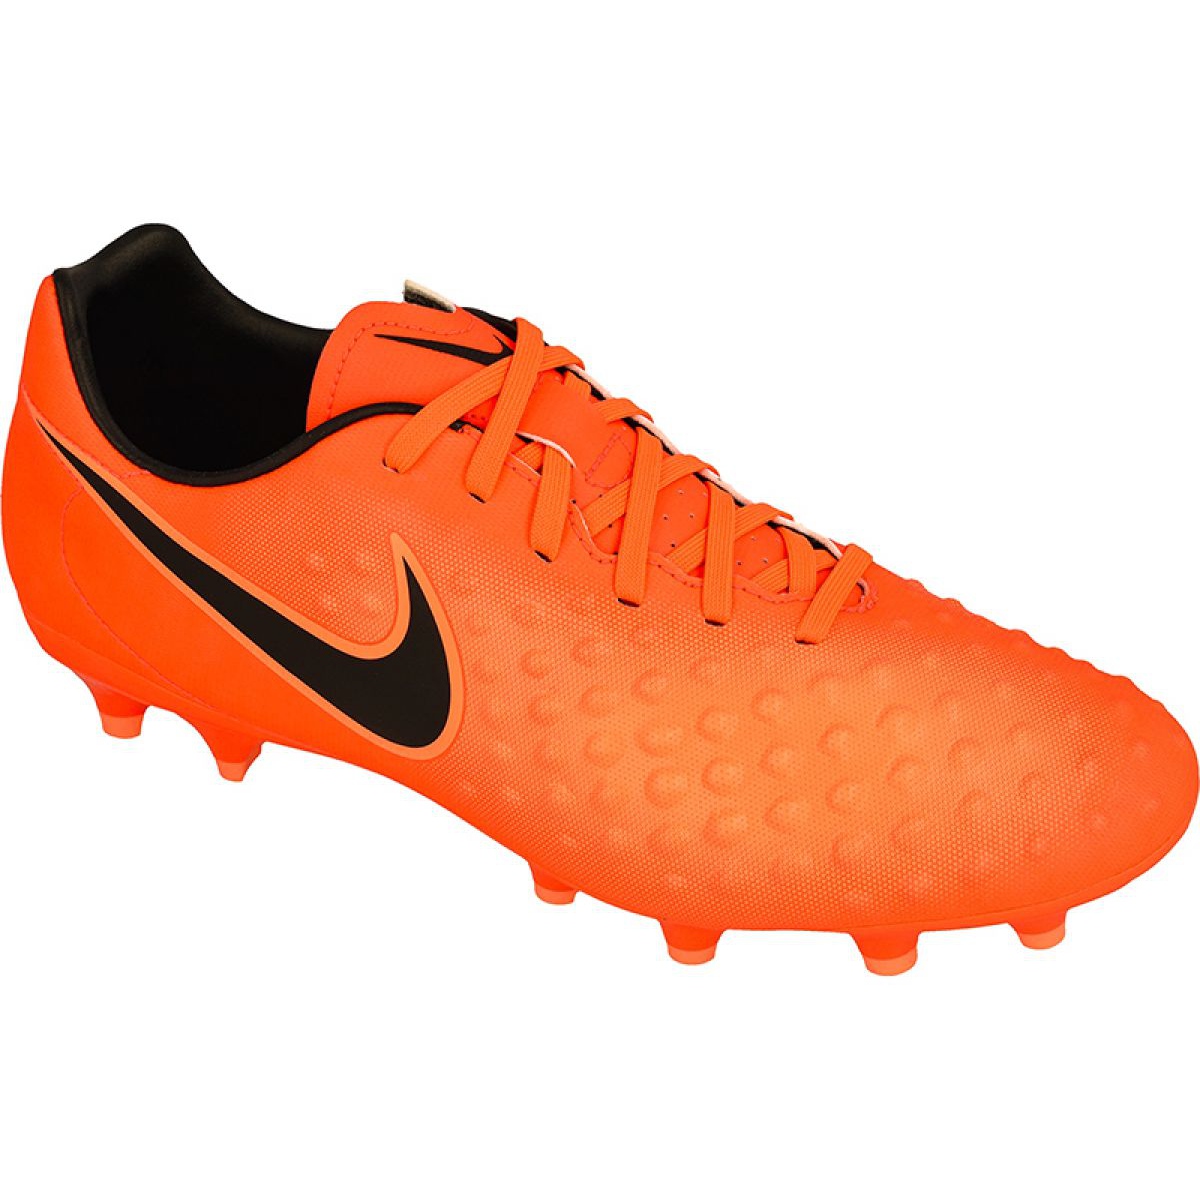 Nike Ii Fg M 844411-808 fodboldsko orange -